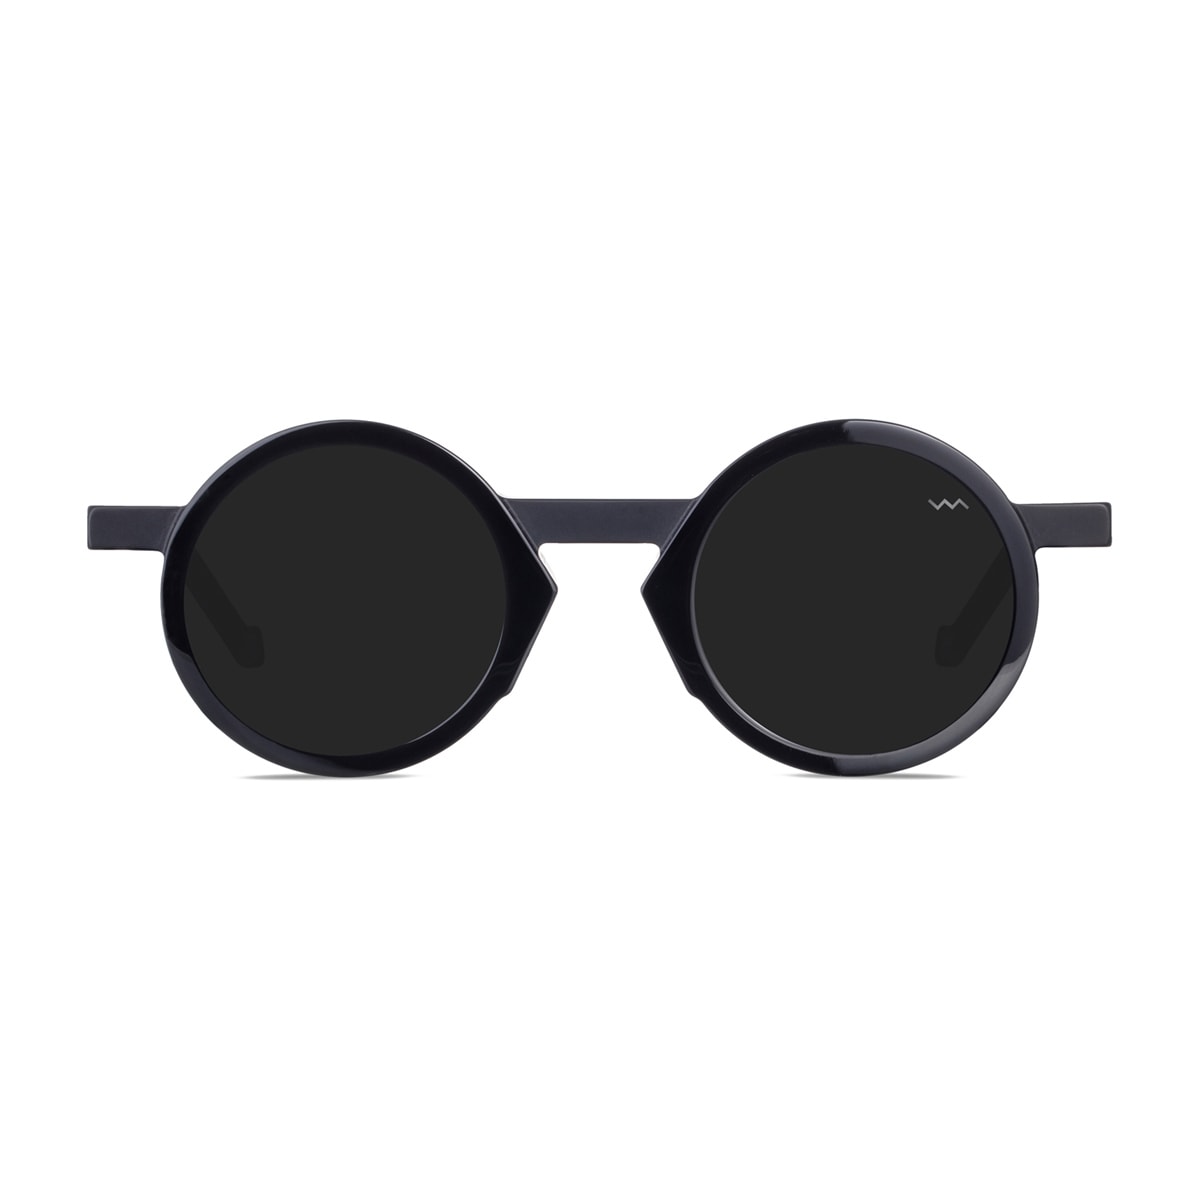 Wl0040 Black Sunglasses